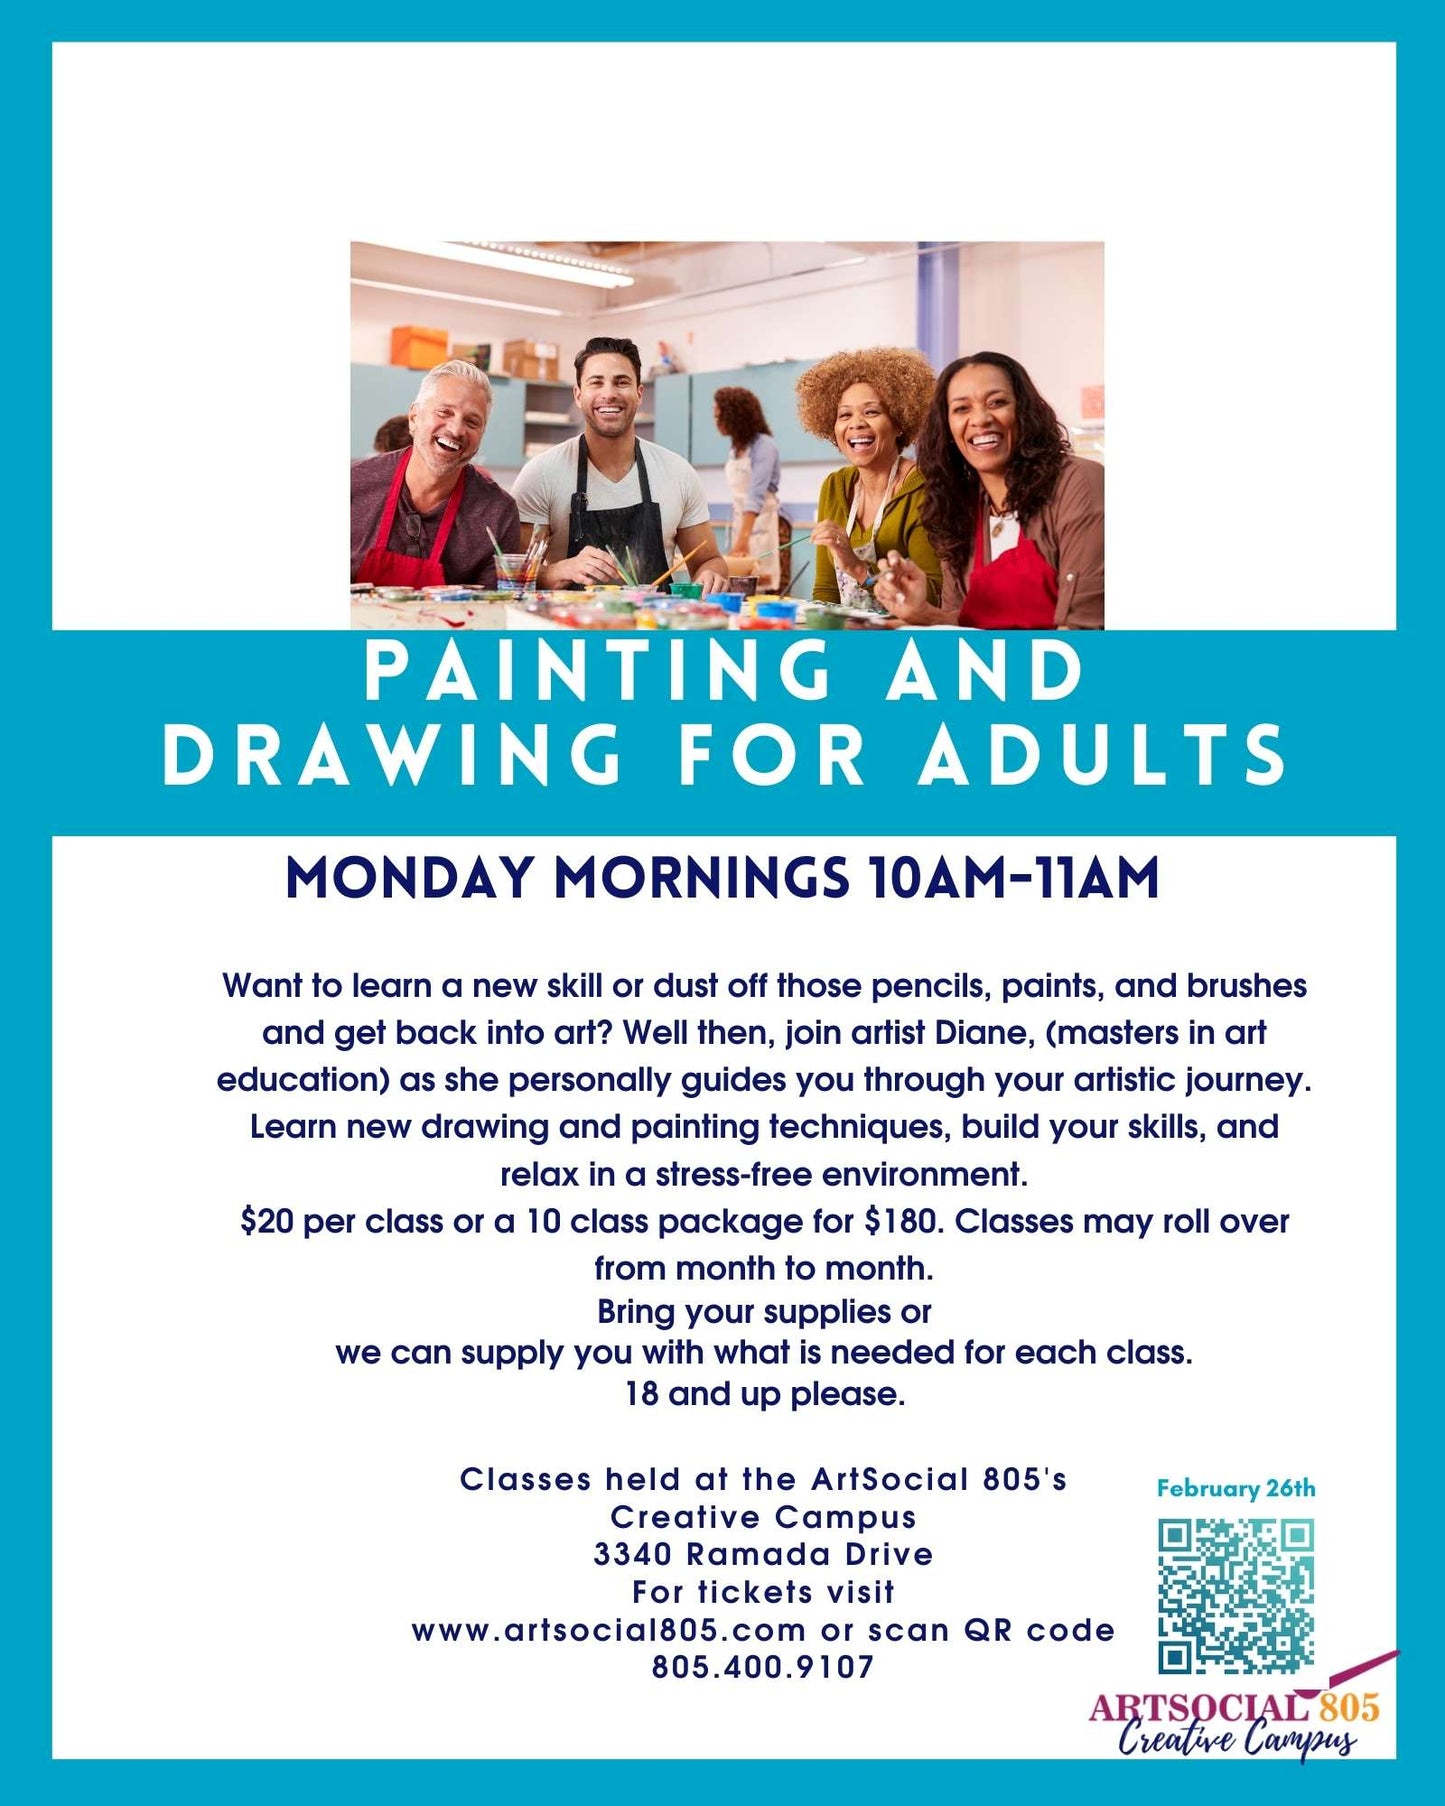 Adult Drawing and Painting at the ArtSocial 805 Creative Campus